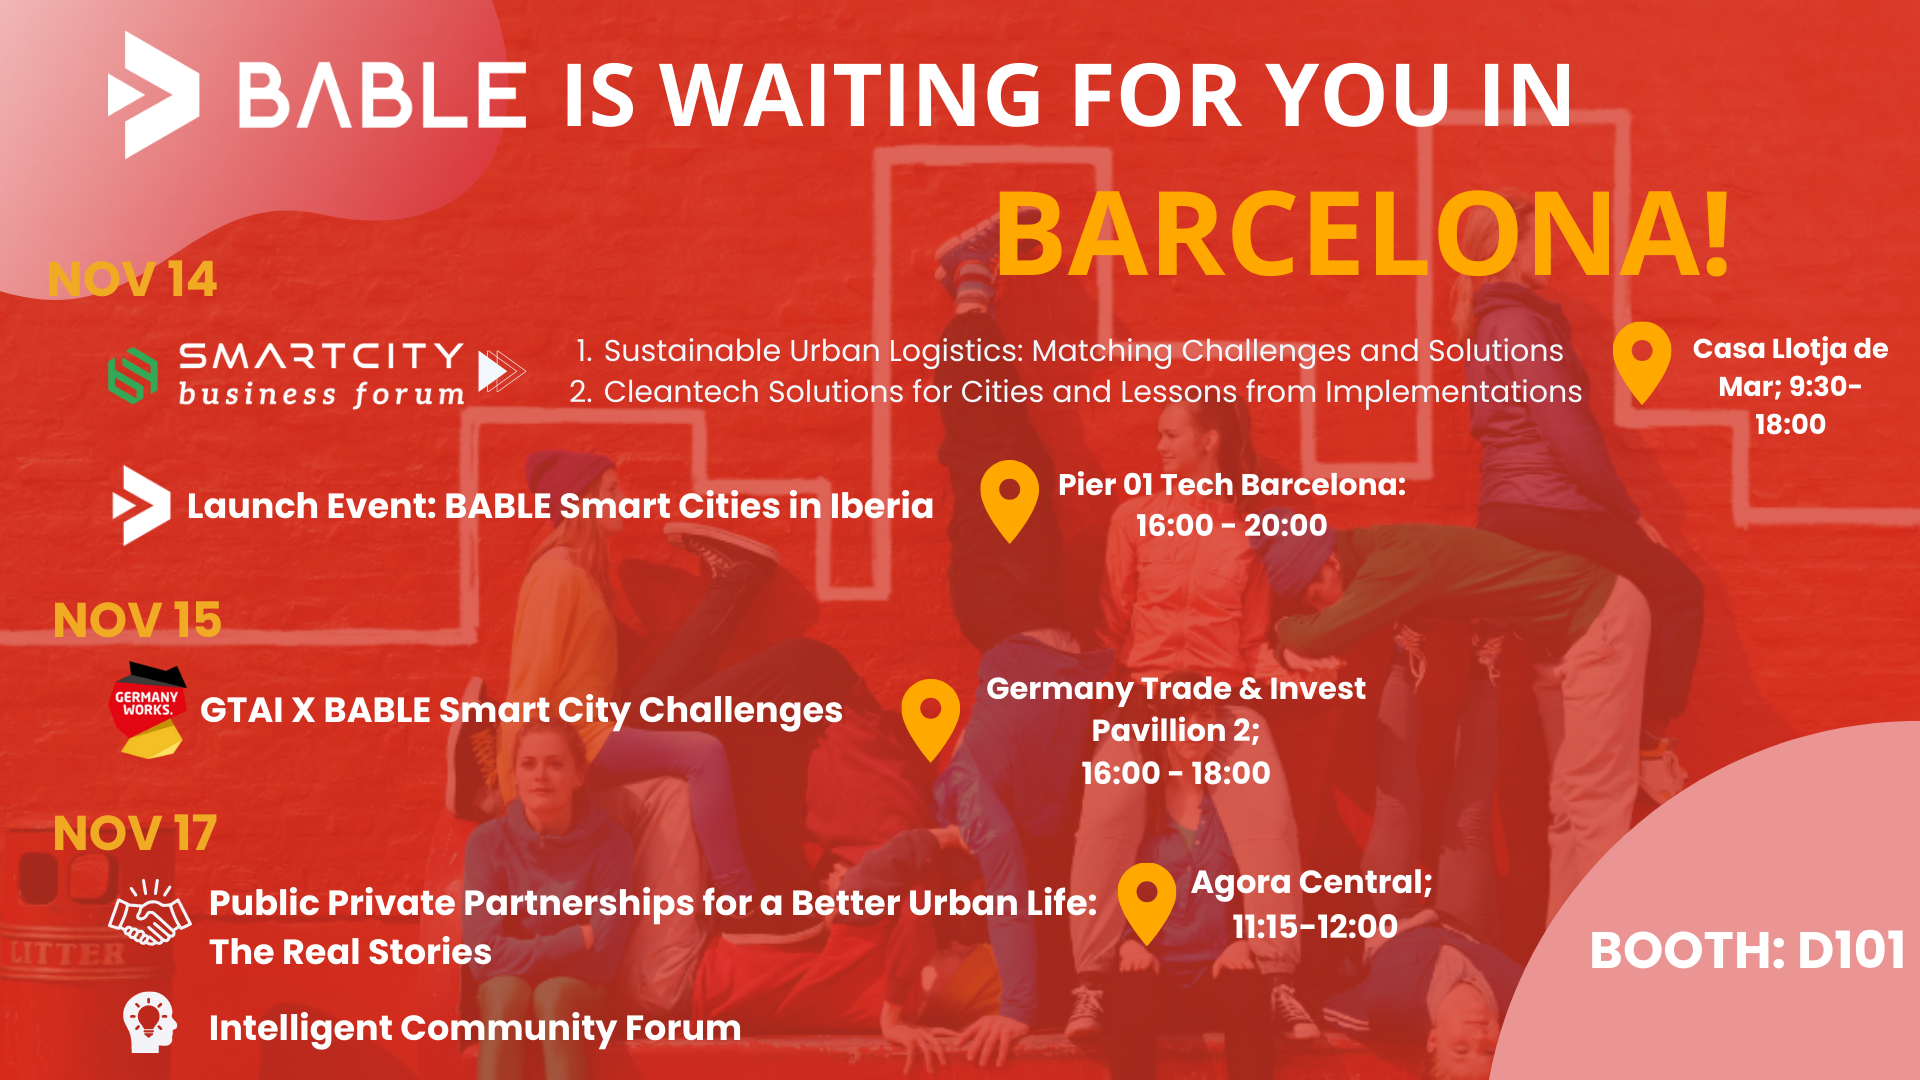 BABLE activities: "The Smart City Expo World Congress"